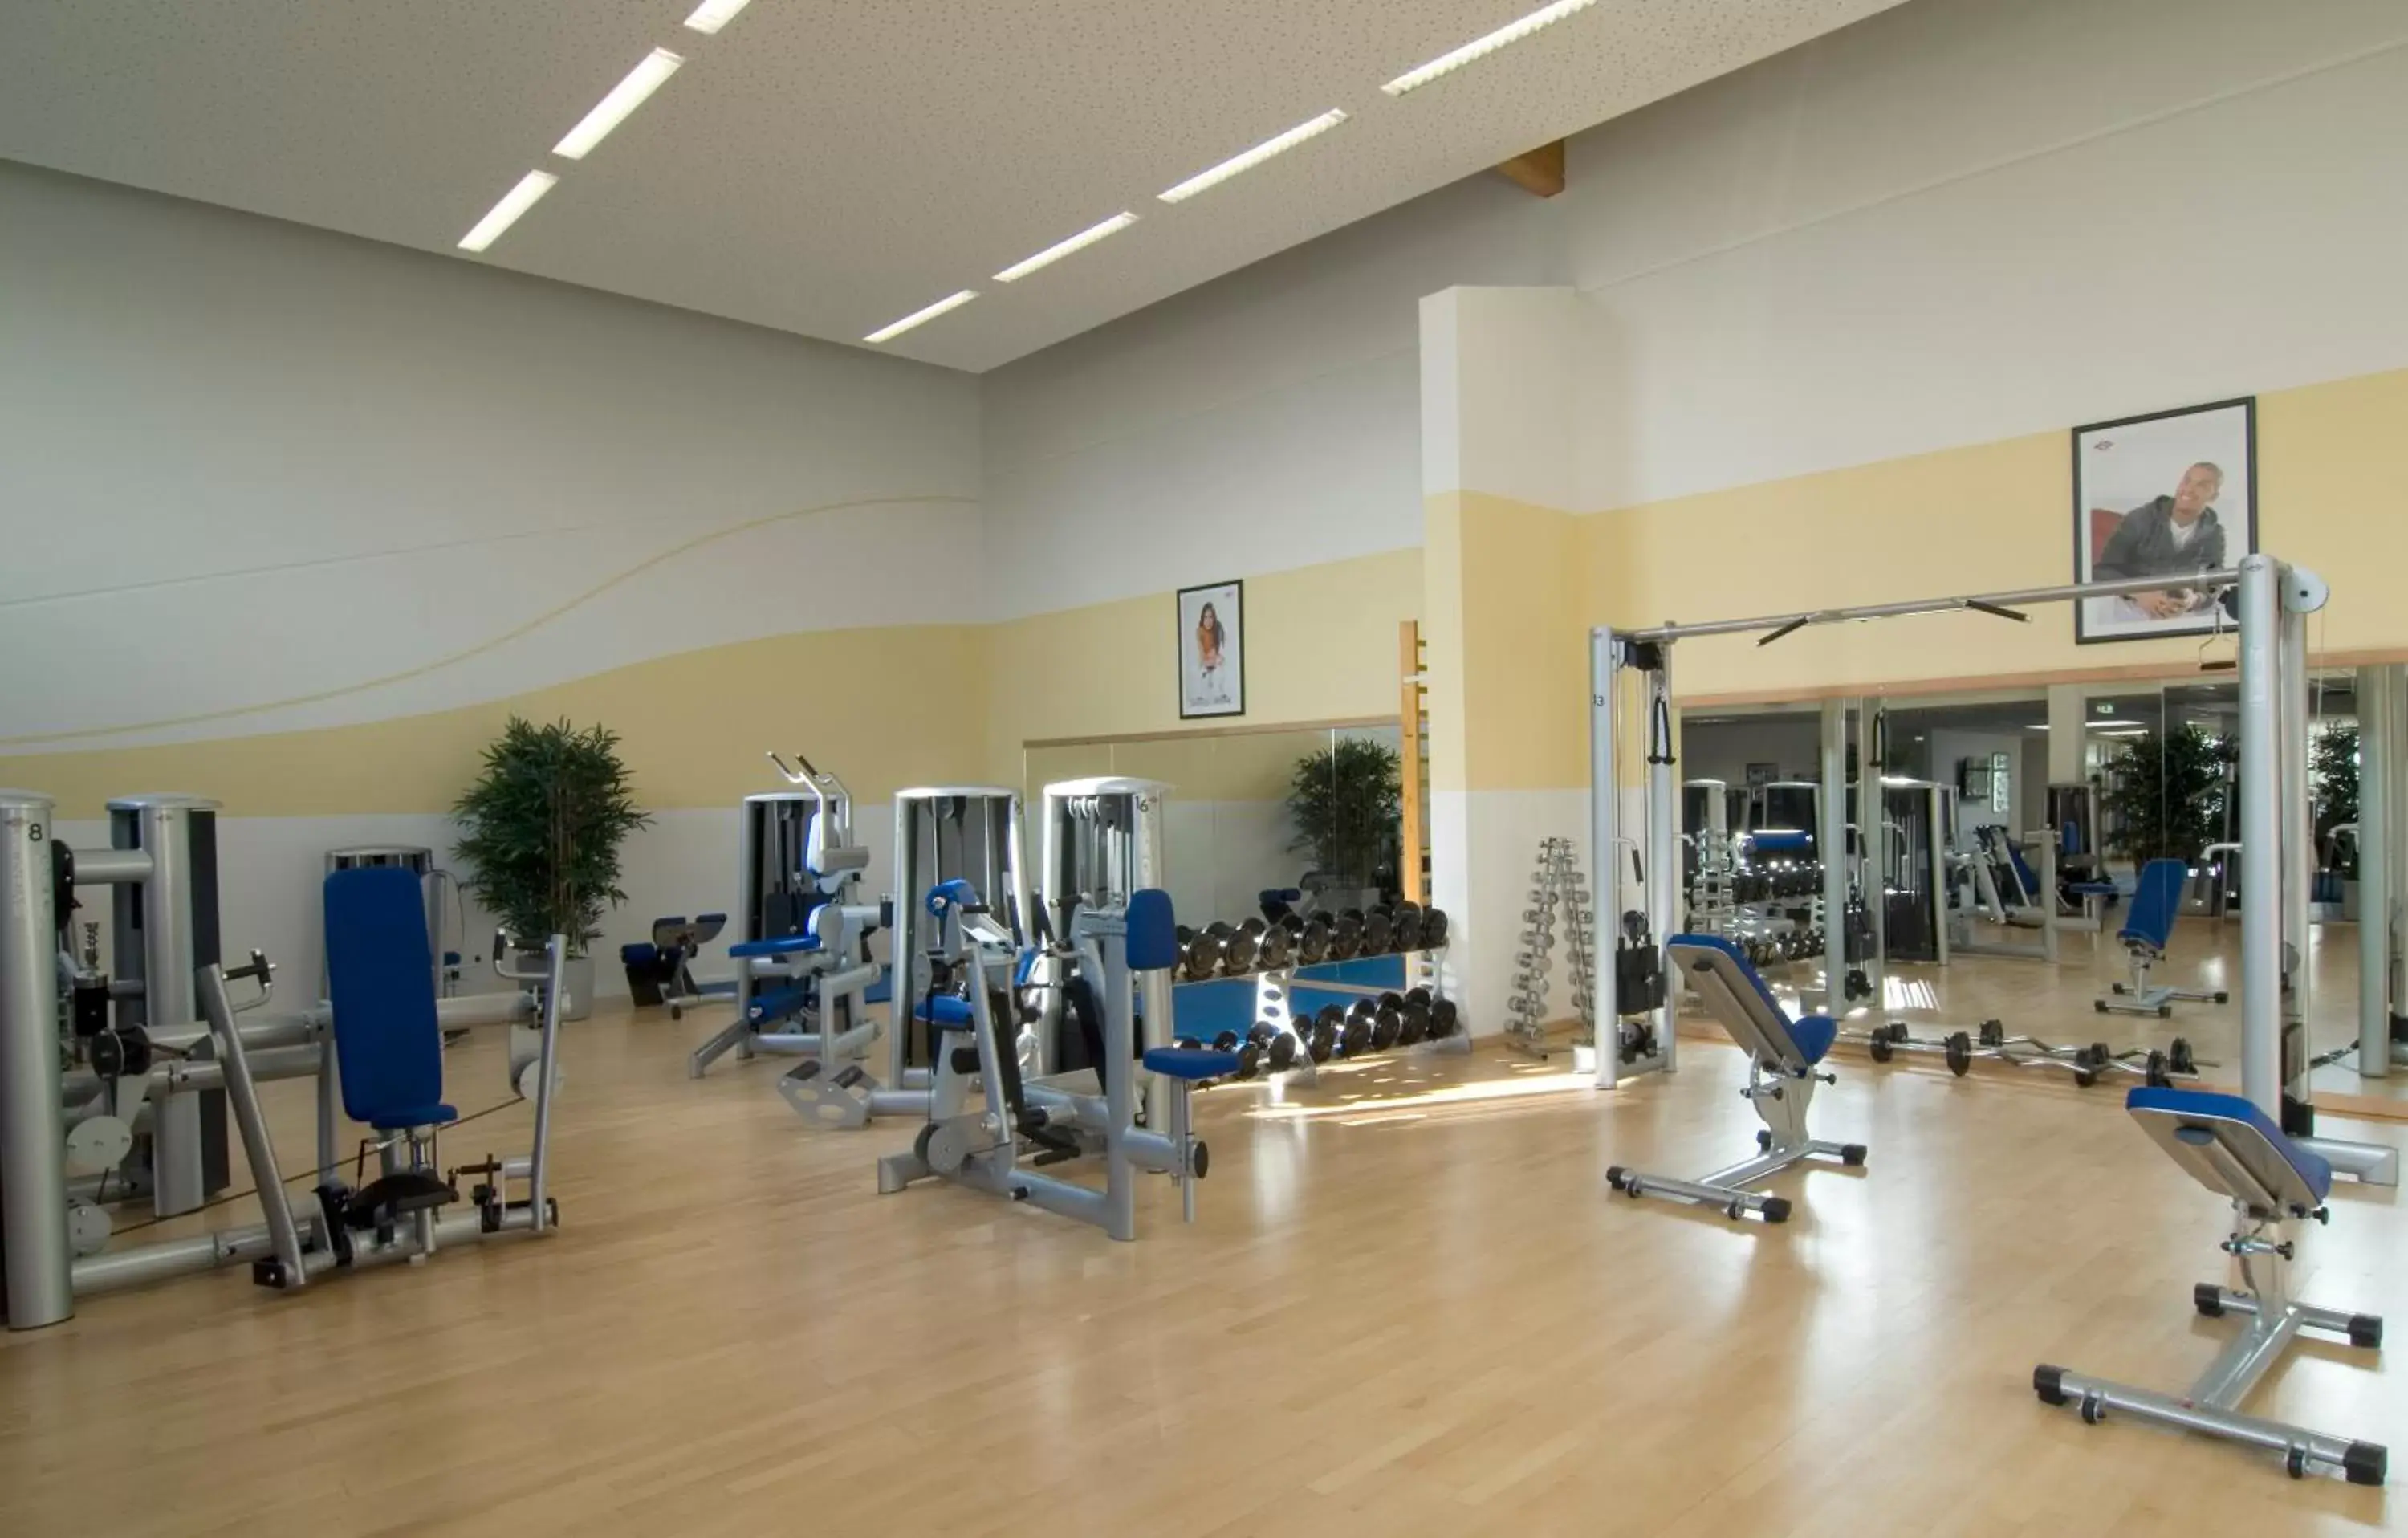 Fitness centre/facilities, Fitness Center/Facilities in Trans World Hotel Kranichhöhe